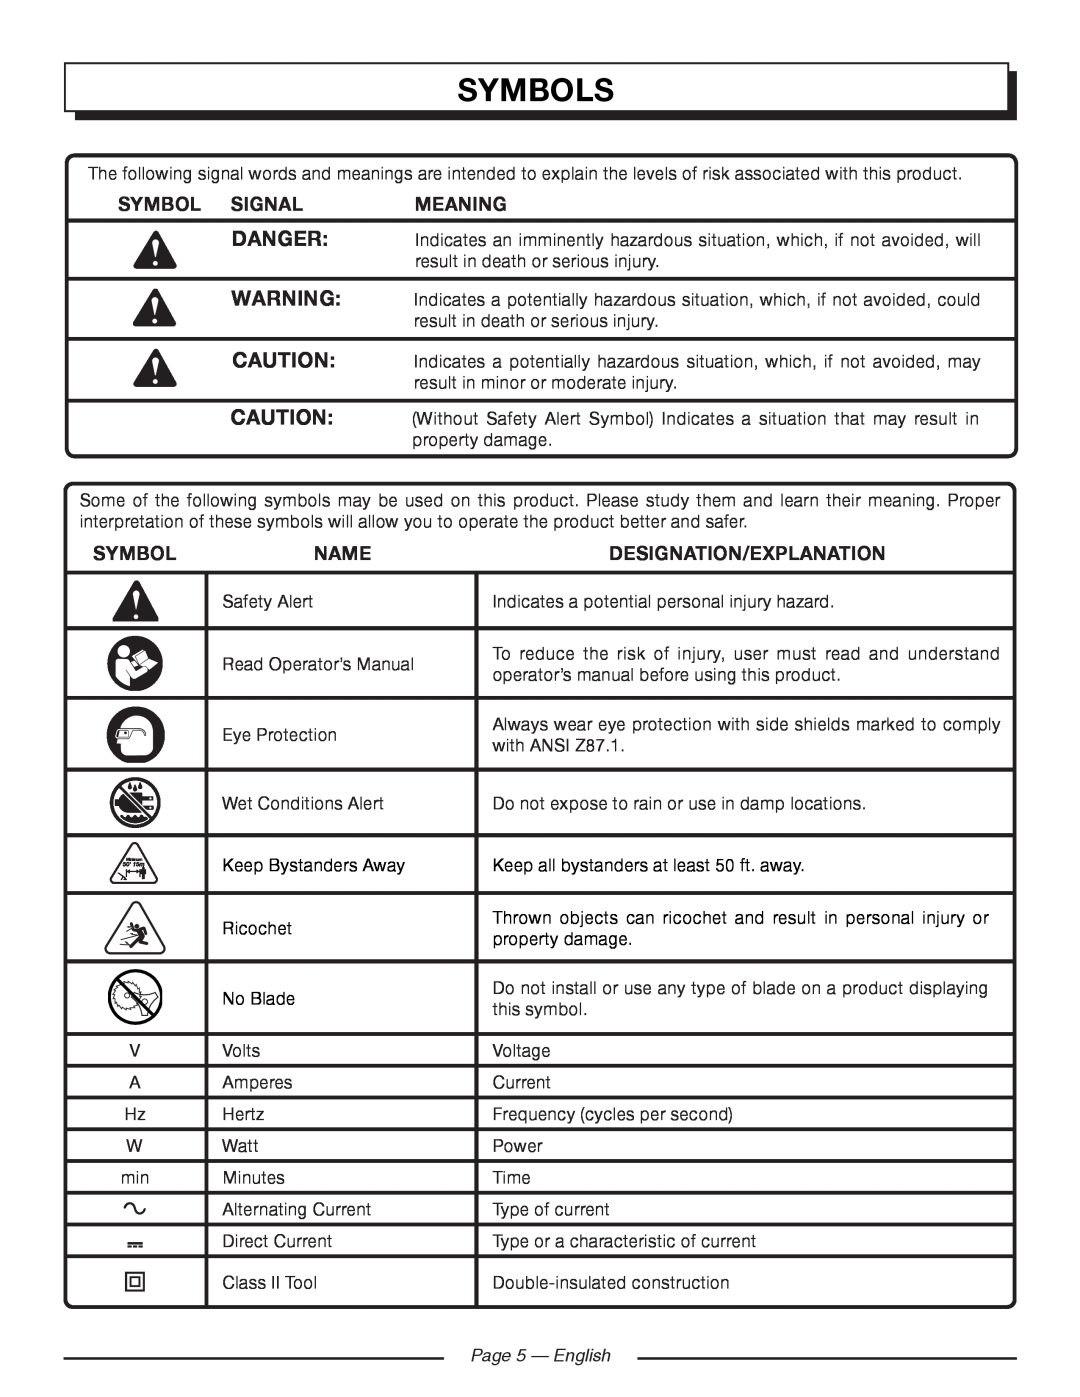 Homelite UT41120 Symbols, Danger, Symbol Signal, Meaning, Name, Designation/Explanation, Page 5 - English 